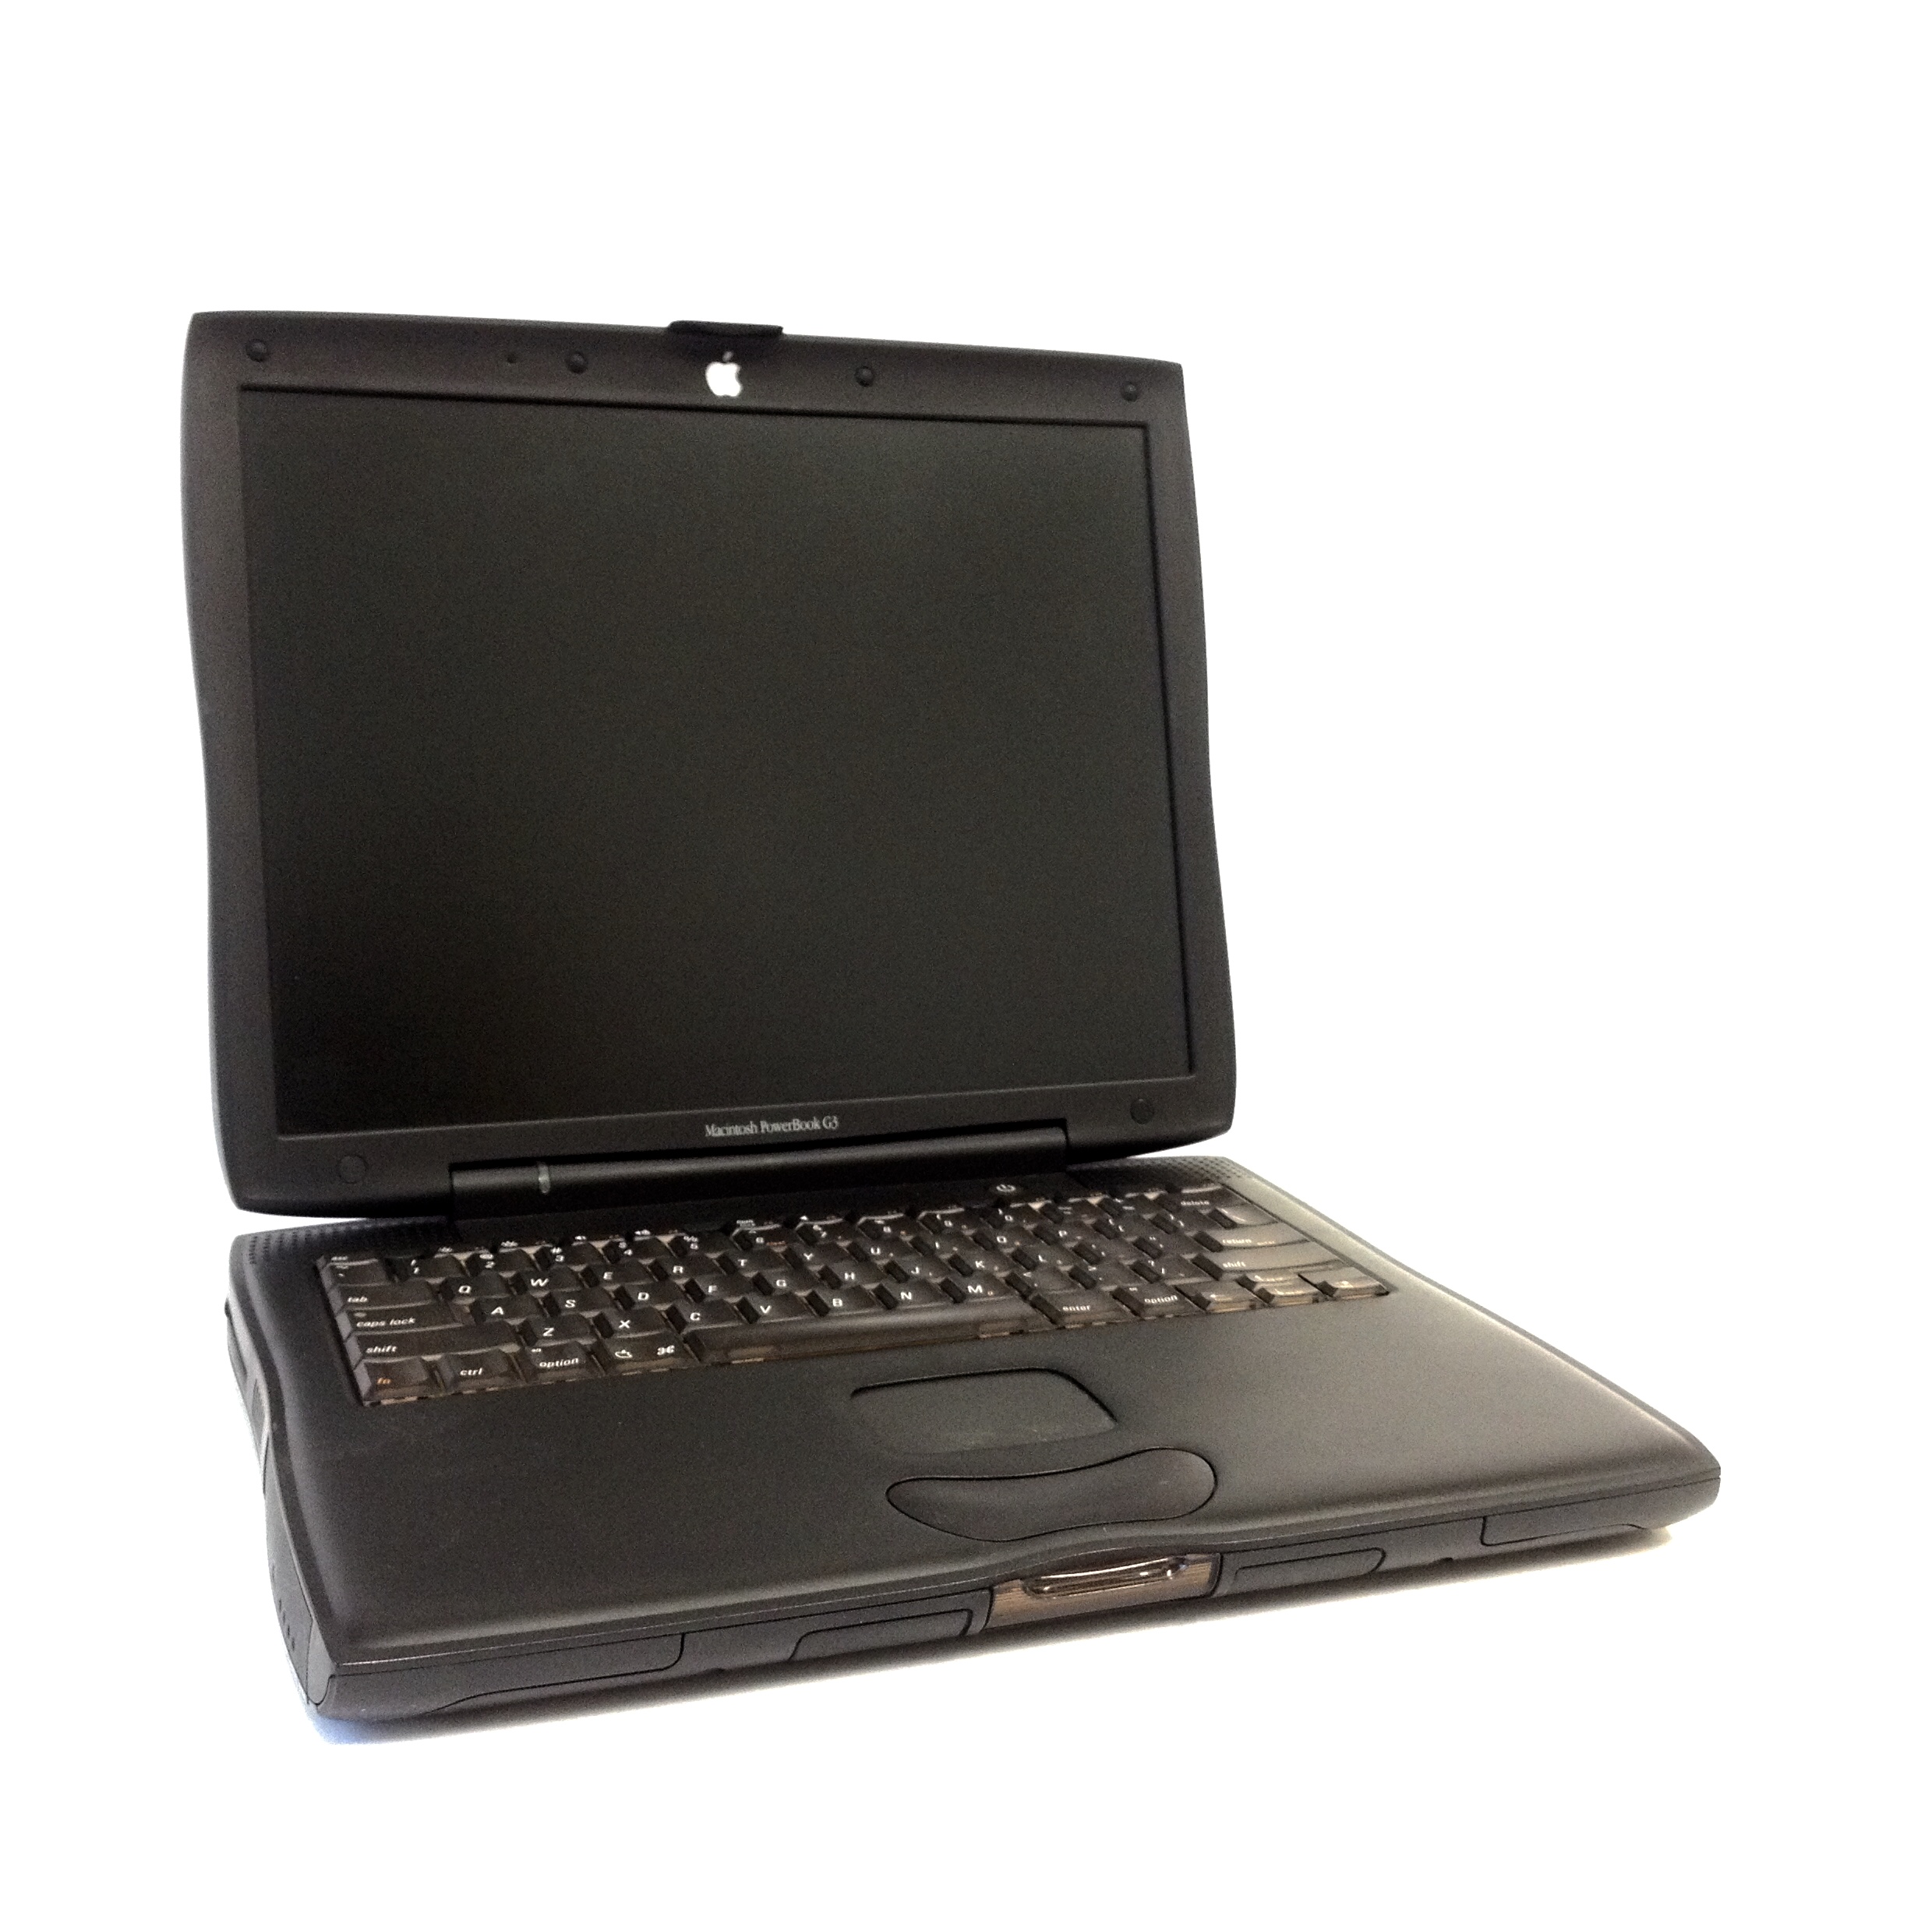 Английское название ноутбука 6. POWERBOOK g3. Apple POWERBOOK g3. POWERBOOK Duo Keyboard. Ноутбук ДНС старый.